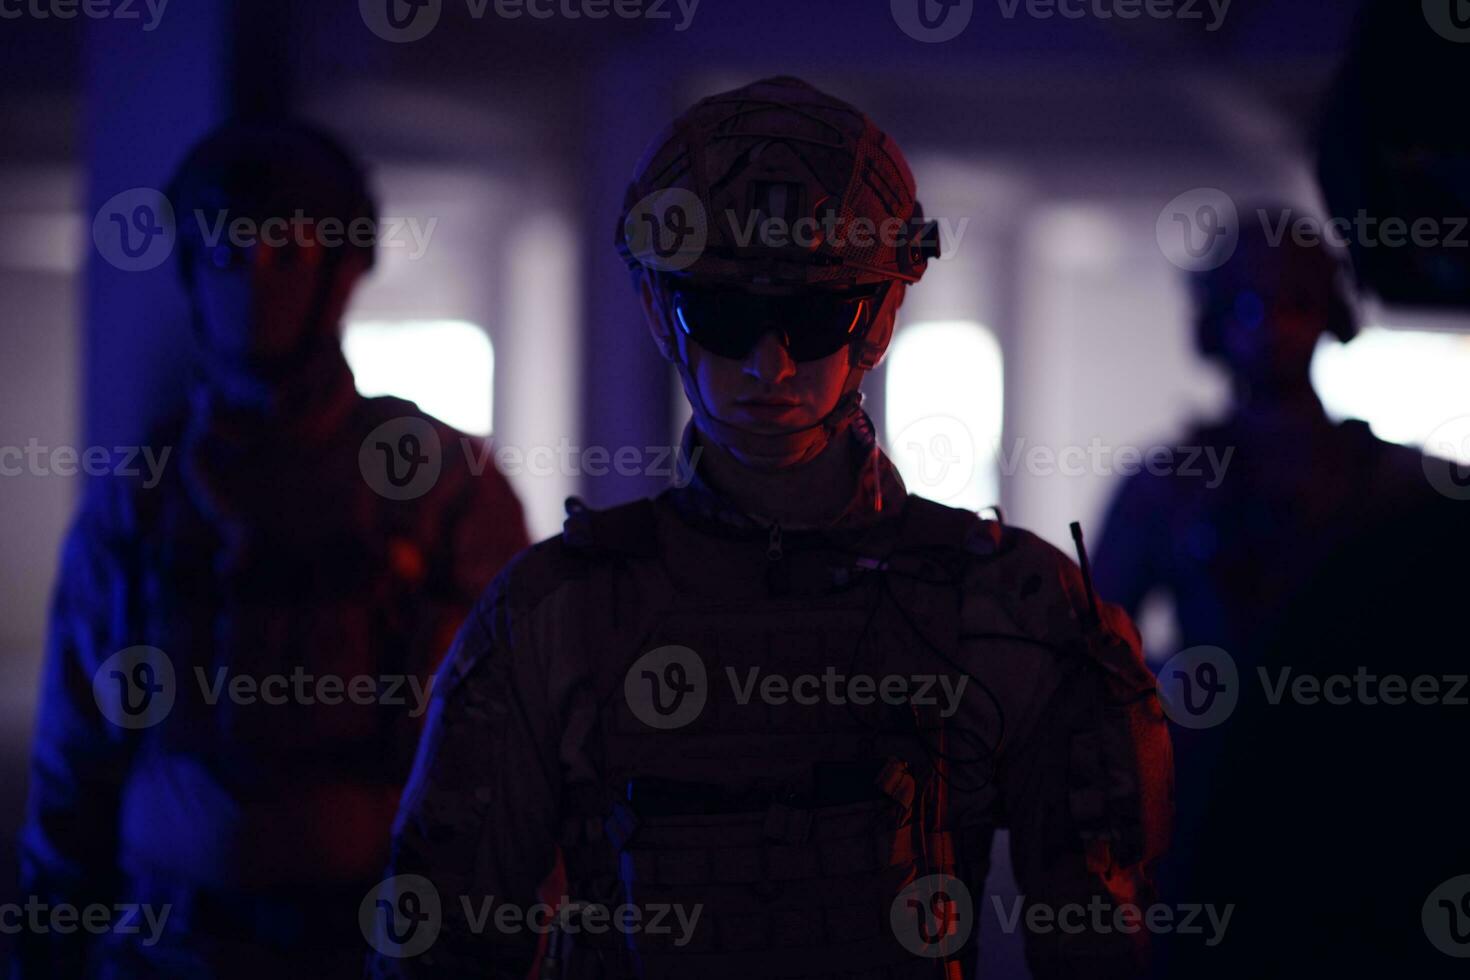 soldier squad team portrait in urban environment colored lightis photo